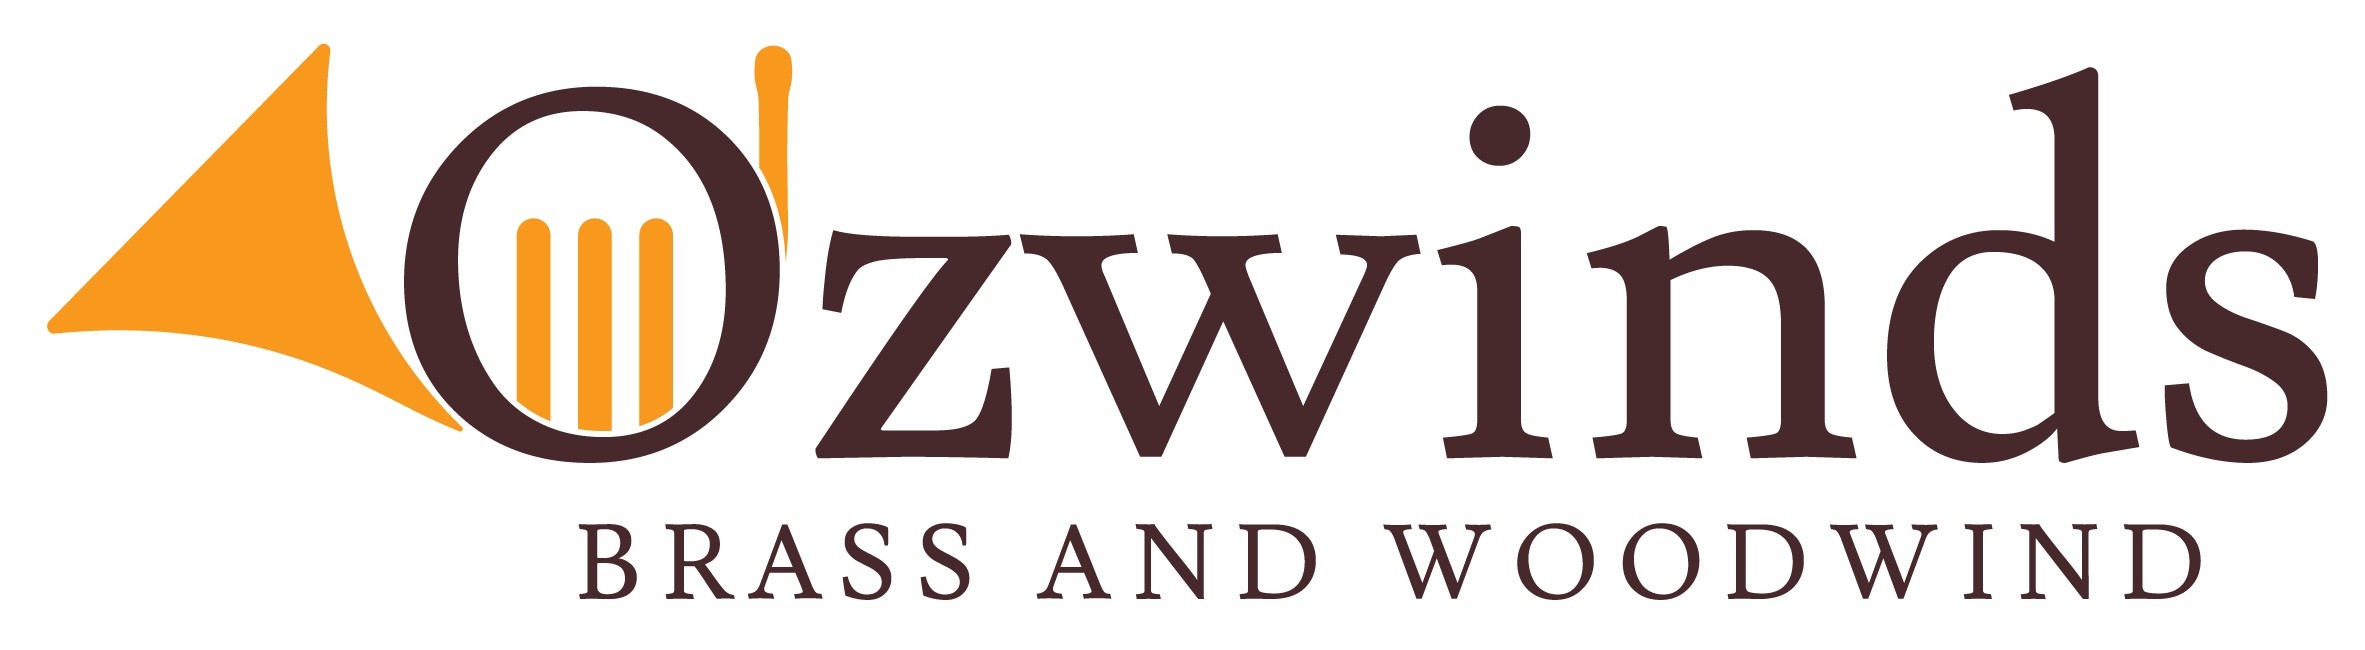 Ozwinds - Brass & Woodwind - SOUTHPORT